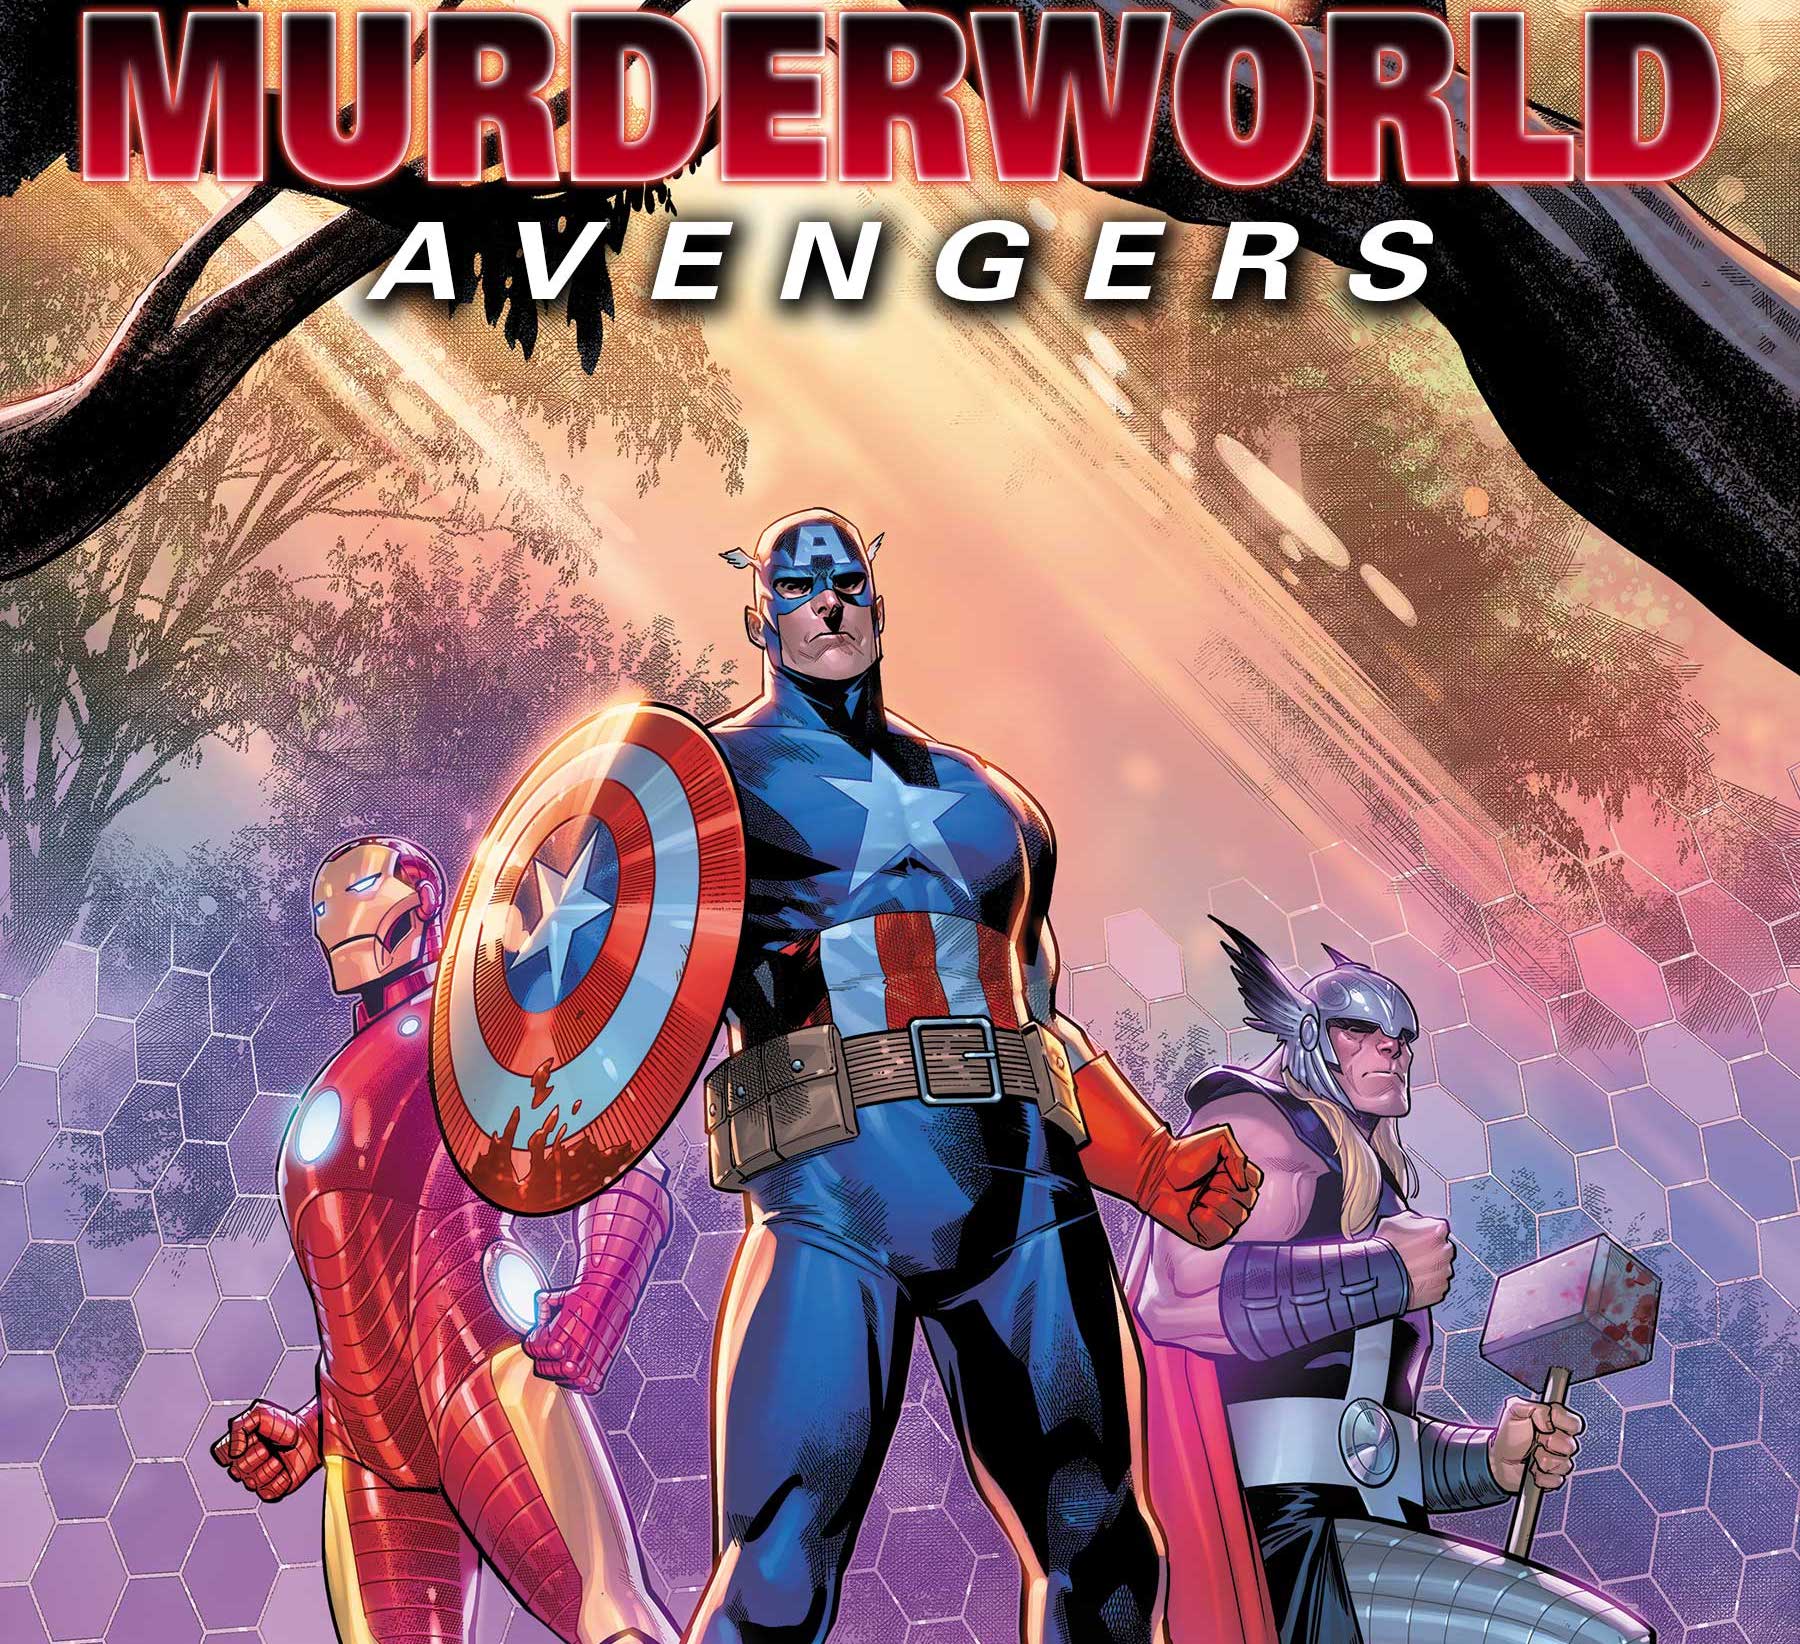 'Murderworld: Avengers' #1 is believable in a world with YouTubers like Mr. Beast